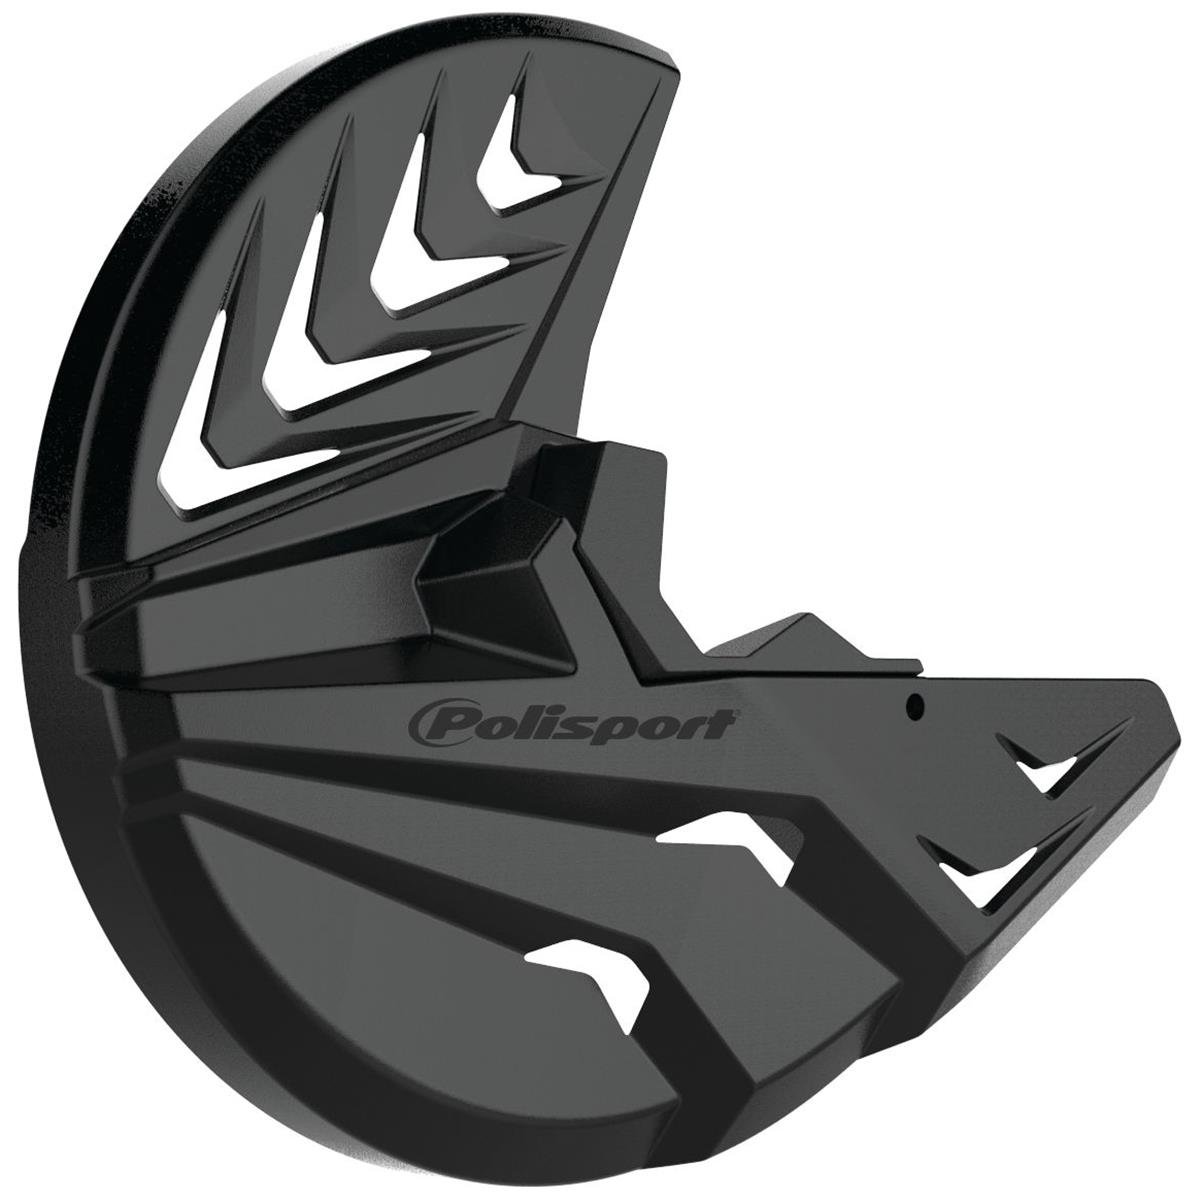 Polisport Brake Disc Cover + Fork foot protector  KTM SX/SX-F 07-14, EXC/EXC-F 08-15, Husqvarna TC/FC '14, TE/FE 14-15, Black